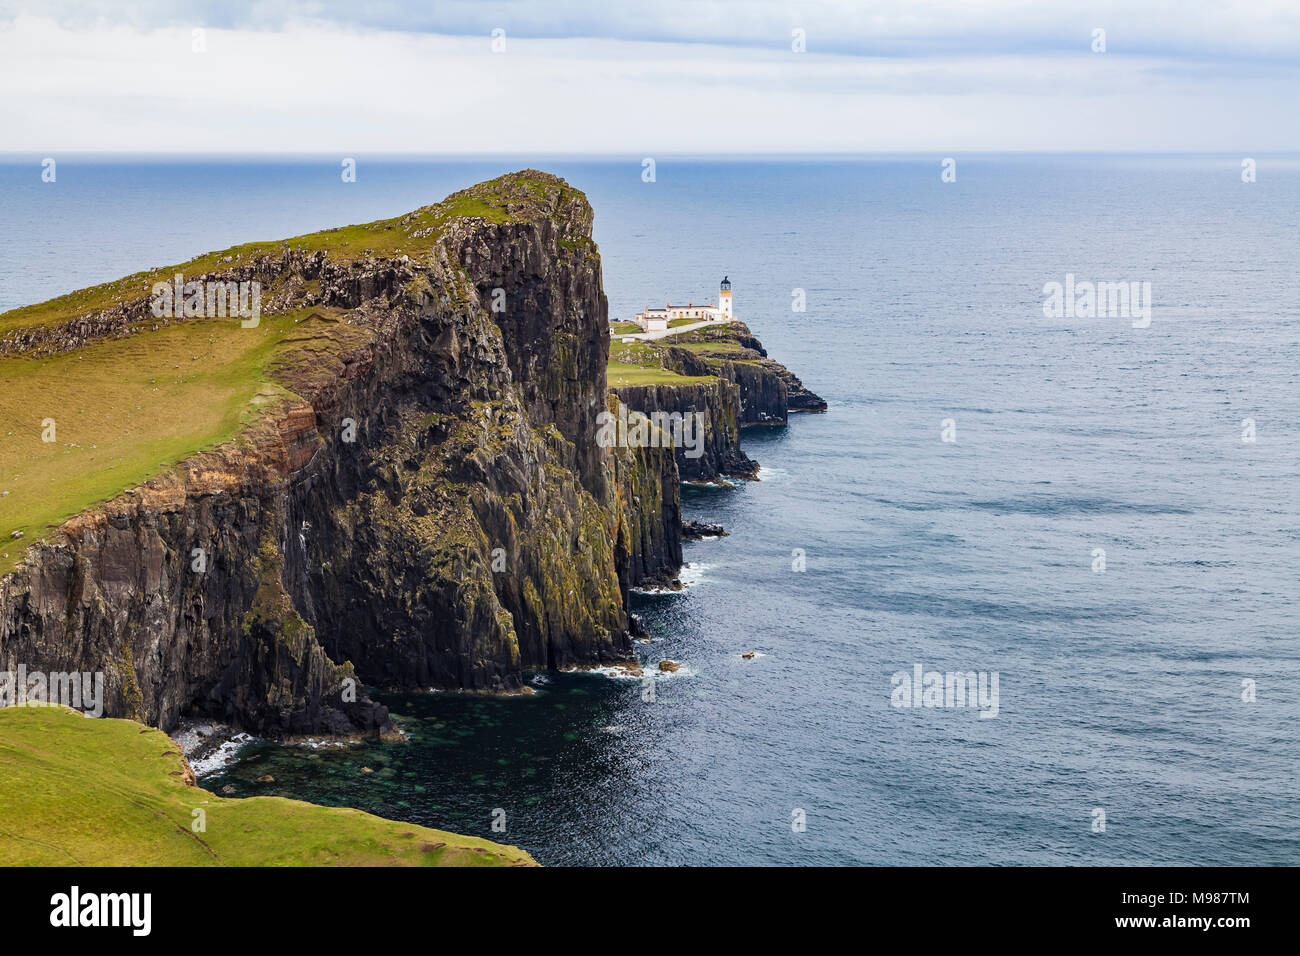 Schottland, Innere Hebriden, Skye, Insel, Isola di Skye Neist Point, Leuchtturm, Meer Foto Stock